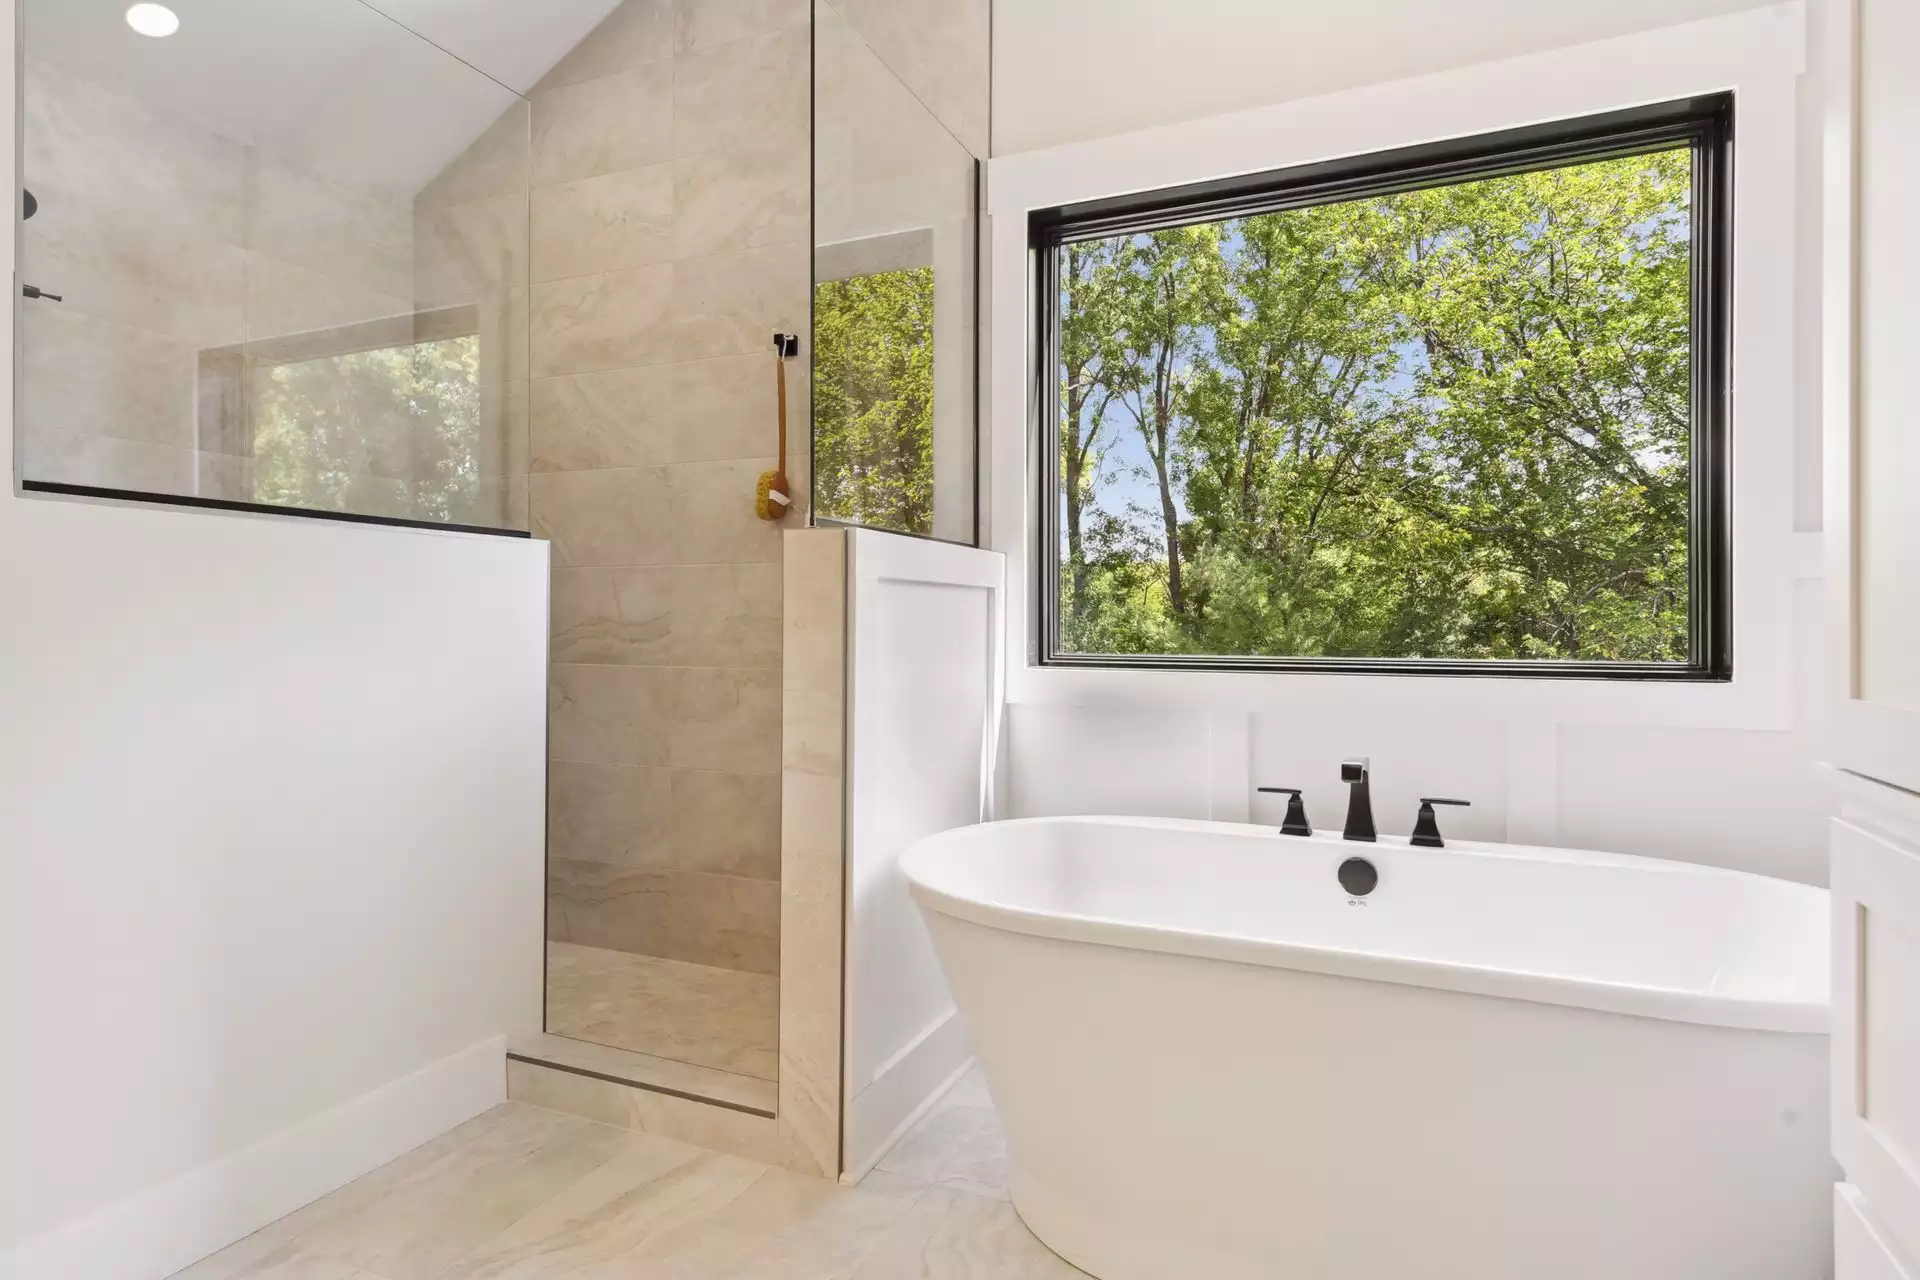 Owner’s suite bathroom features walk-in glass shower